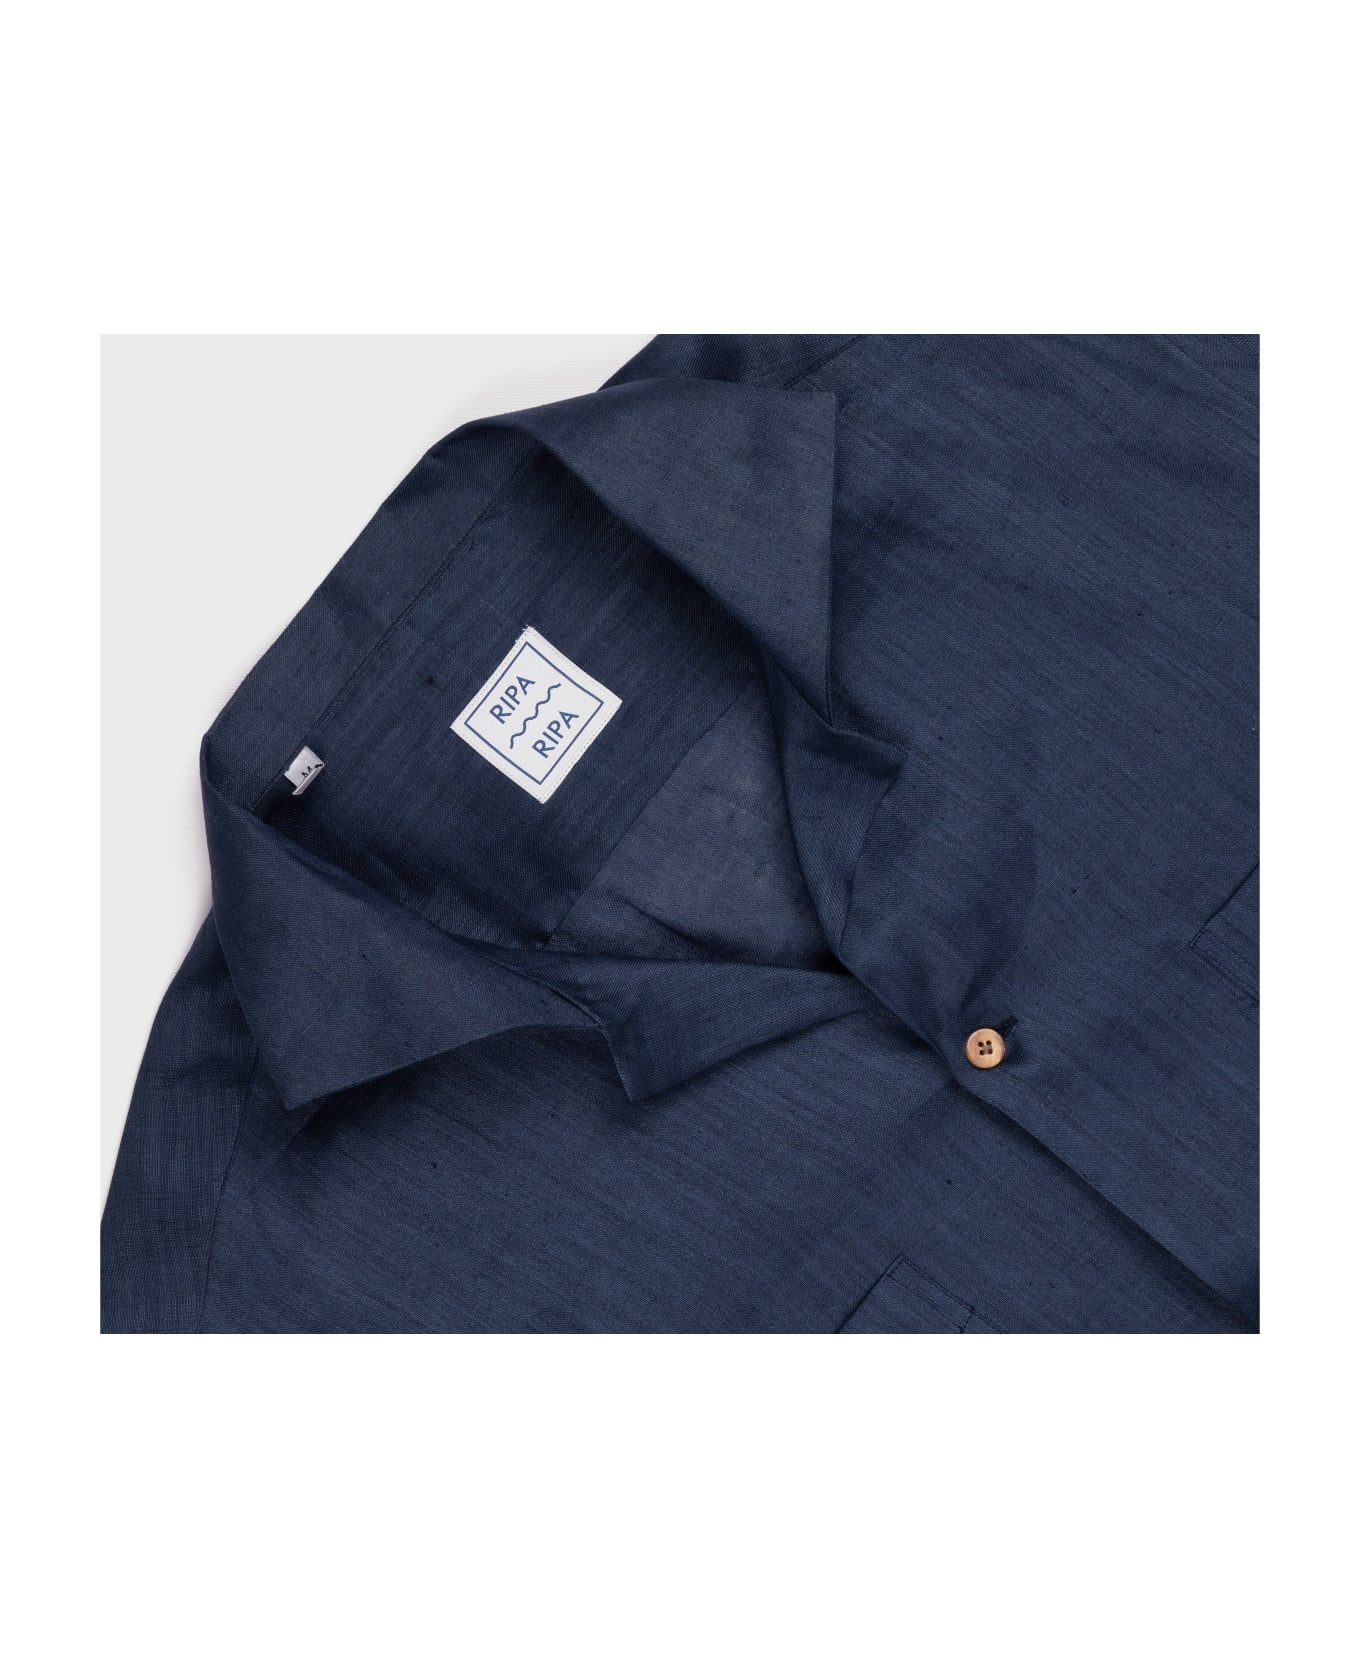 Ripa Ripa Ischia Blu Notte Shirt - Navy